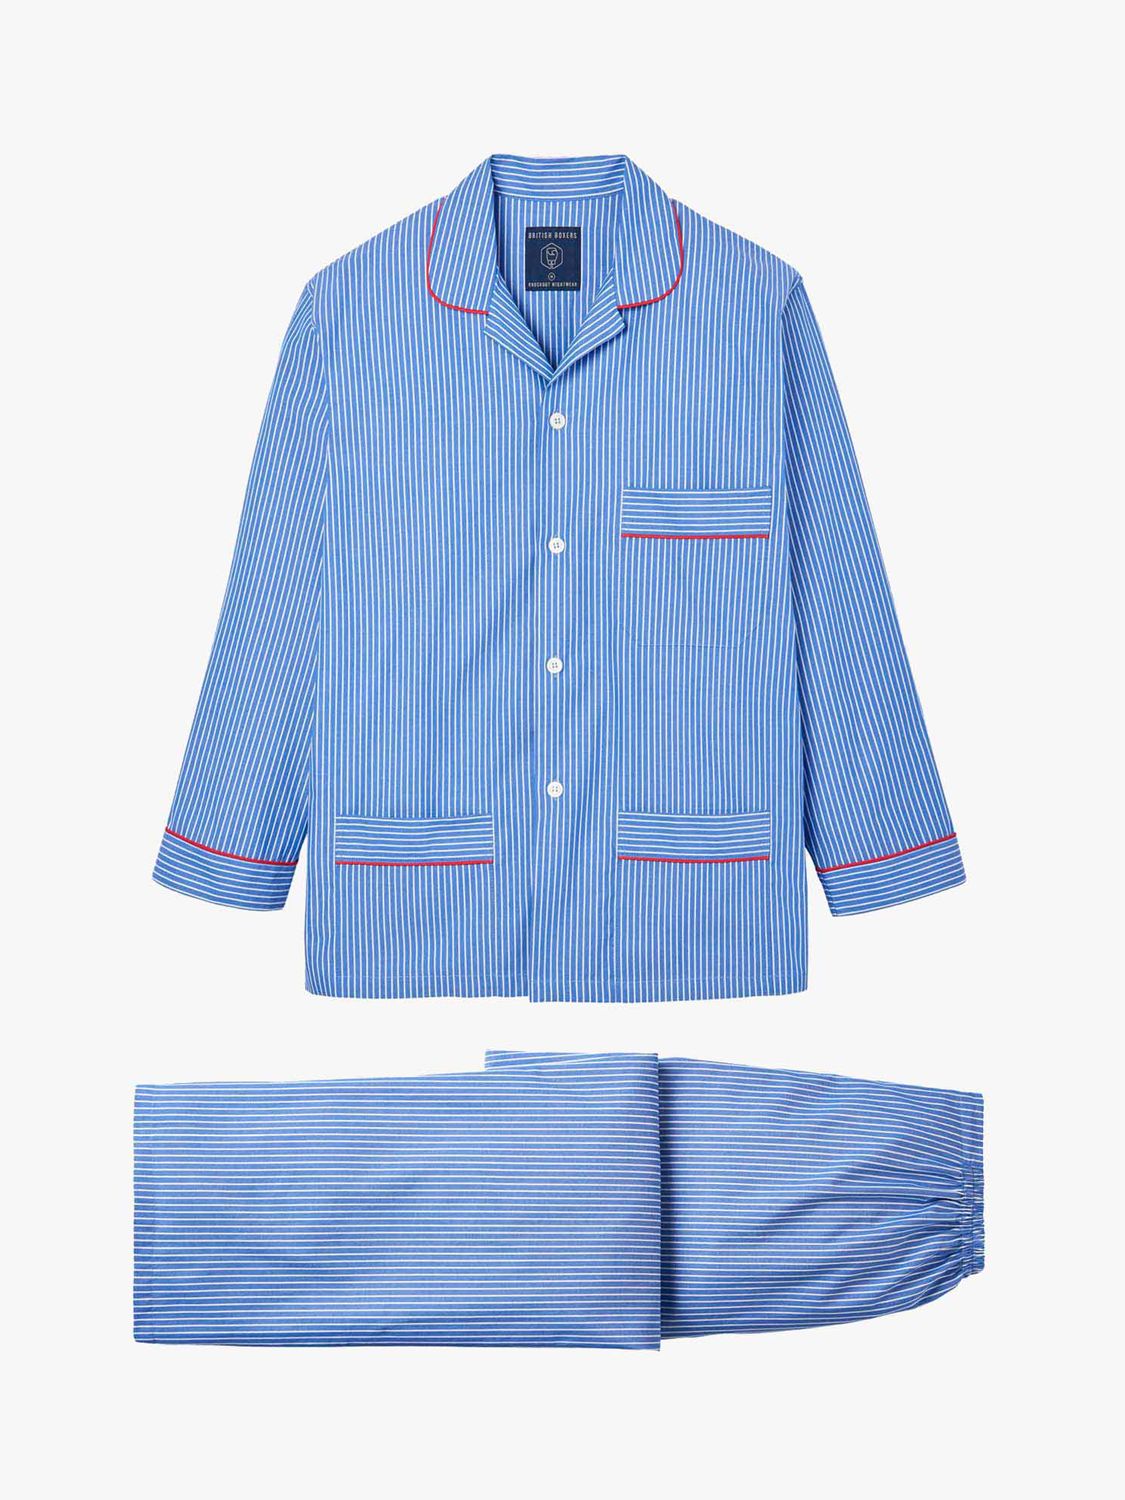 Buy British Boxers Burford Stripe Crisp Cotton Pyjama Set, Blue Online at johnlewis.com